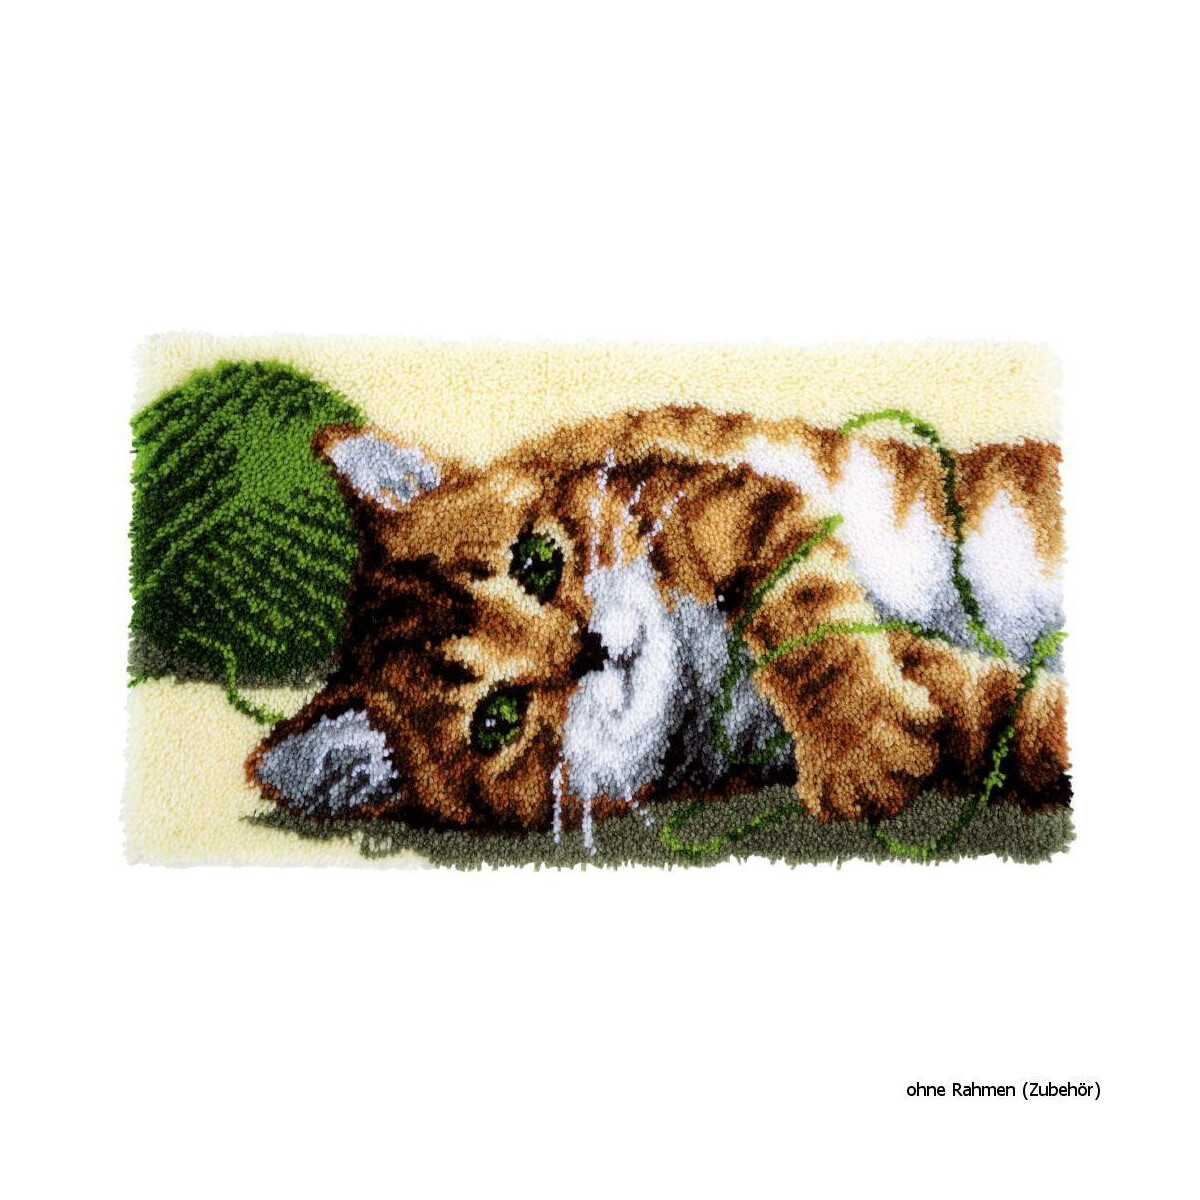 Vervaco Latch hook rug kit Playful cat, DIY